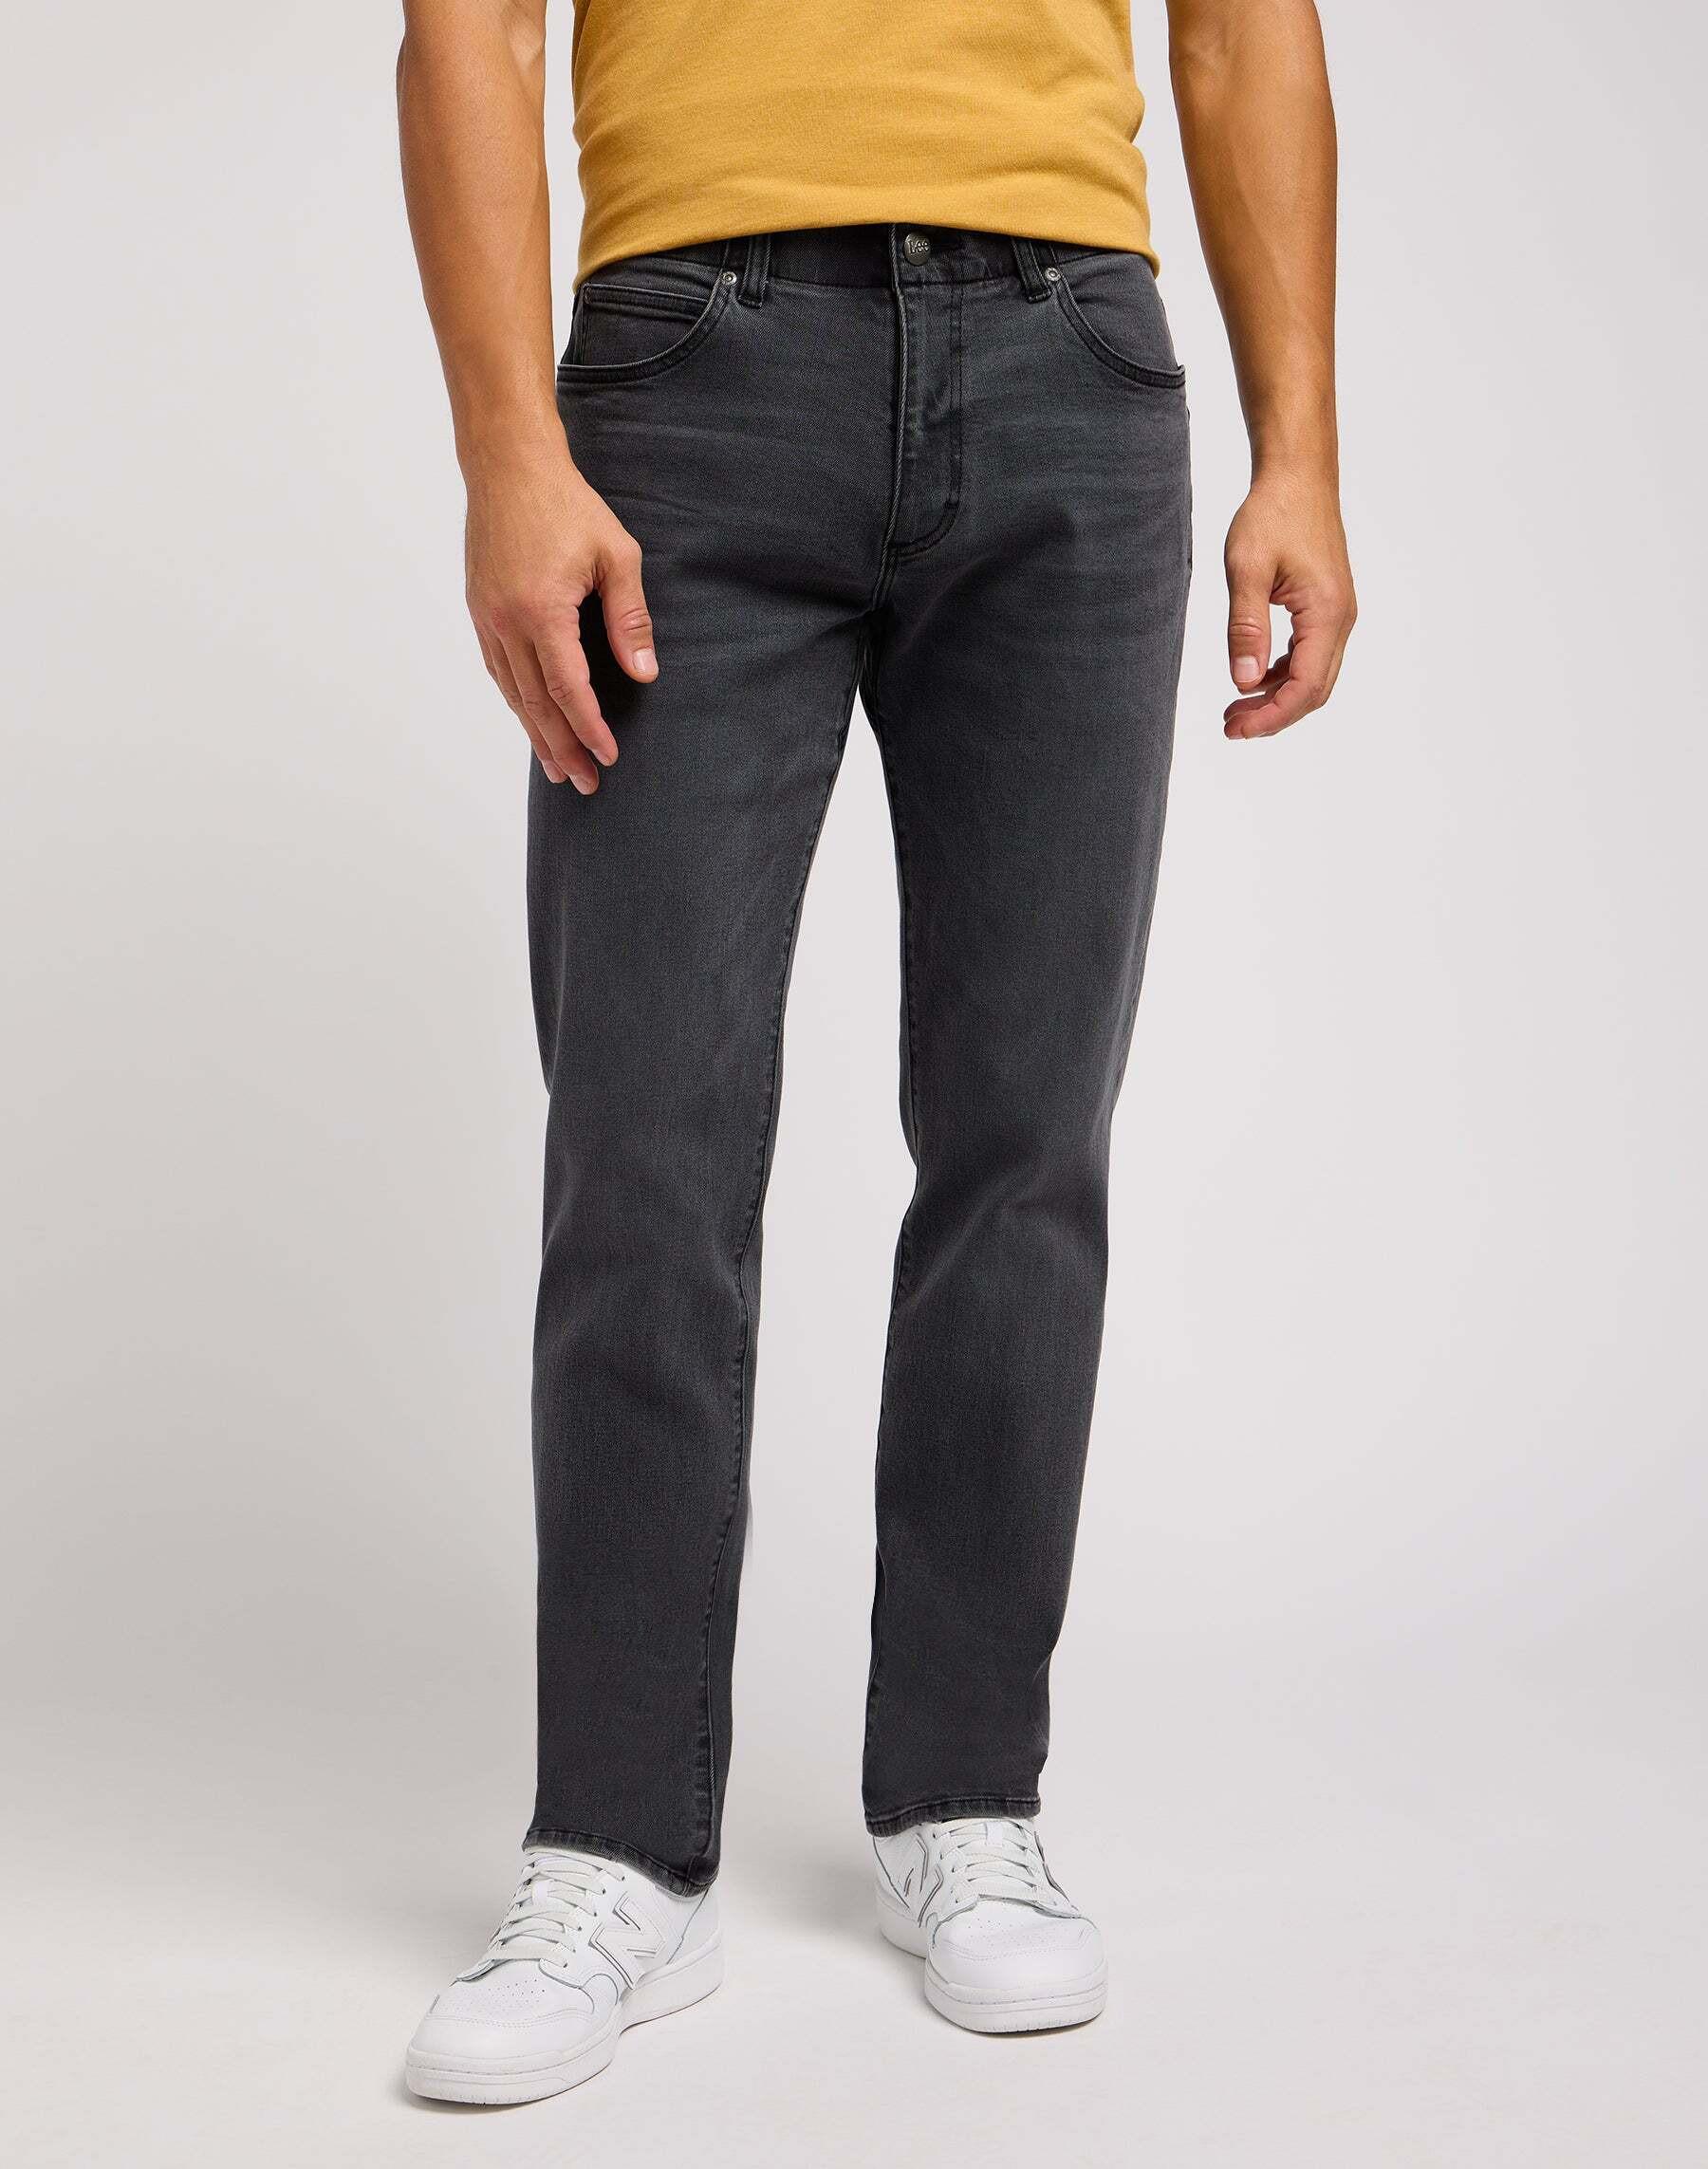 Jeans Straight Fit Mvp Unisex Taubengrau L32/W33